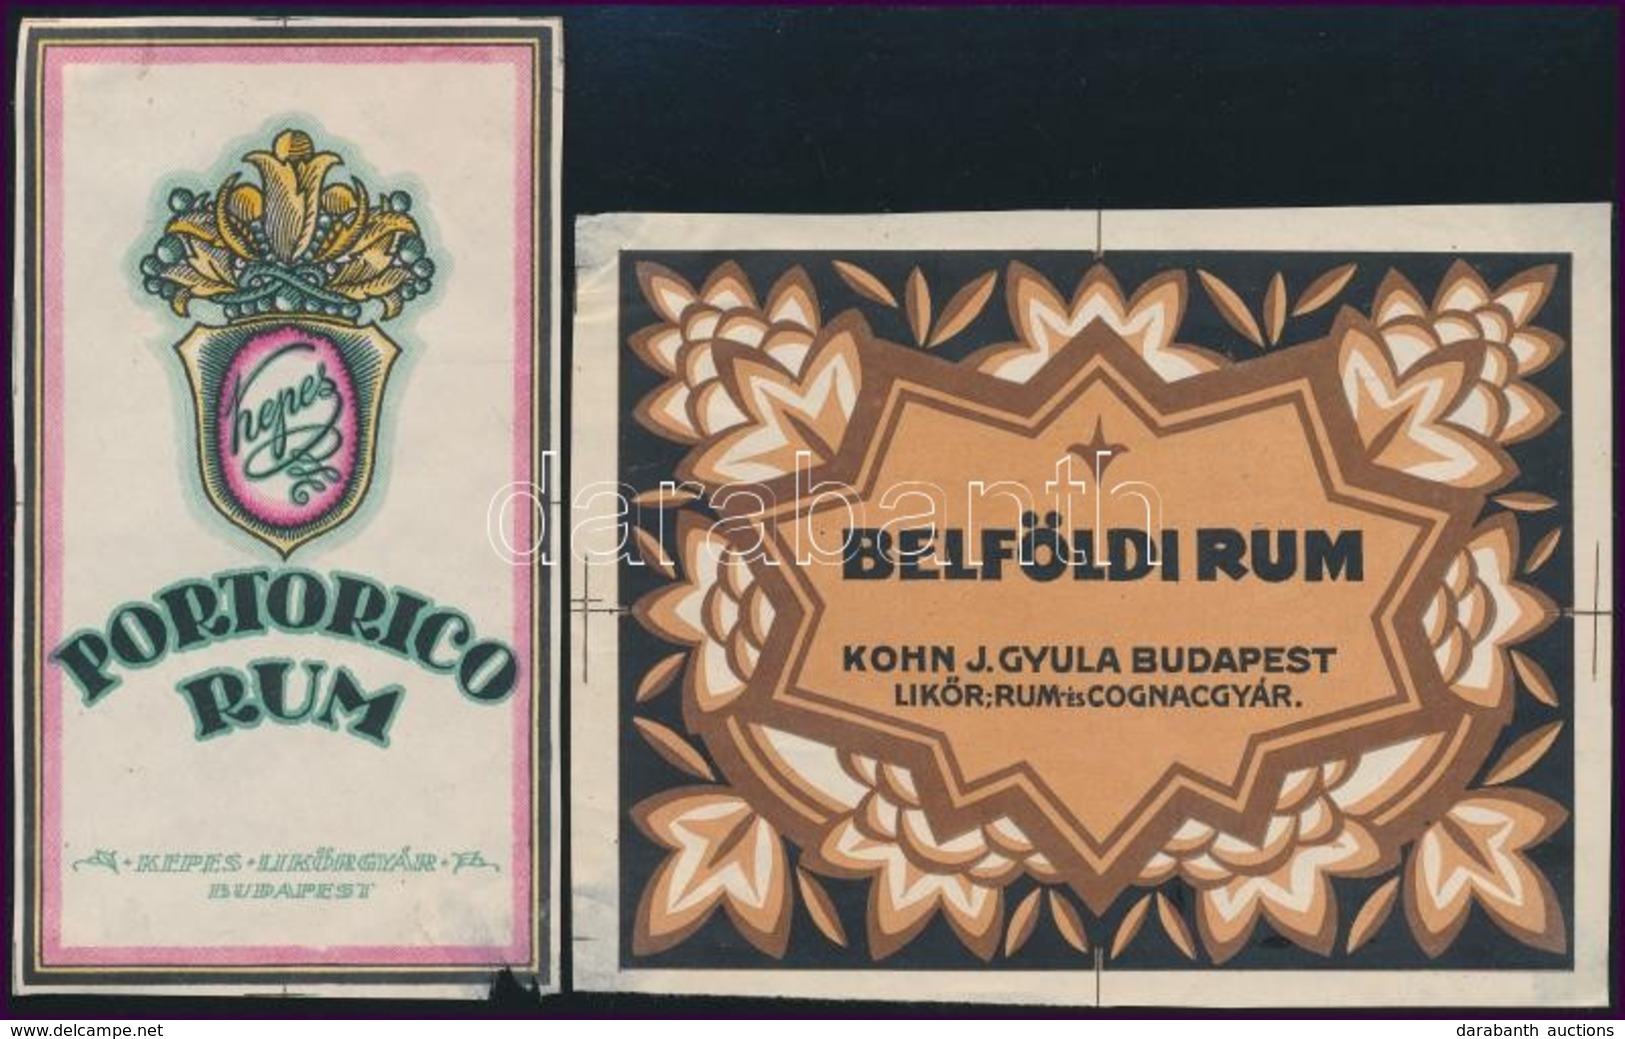 Belföldi Rum és Portorico Rum Italcímke, 2 Db - Publicités